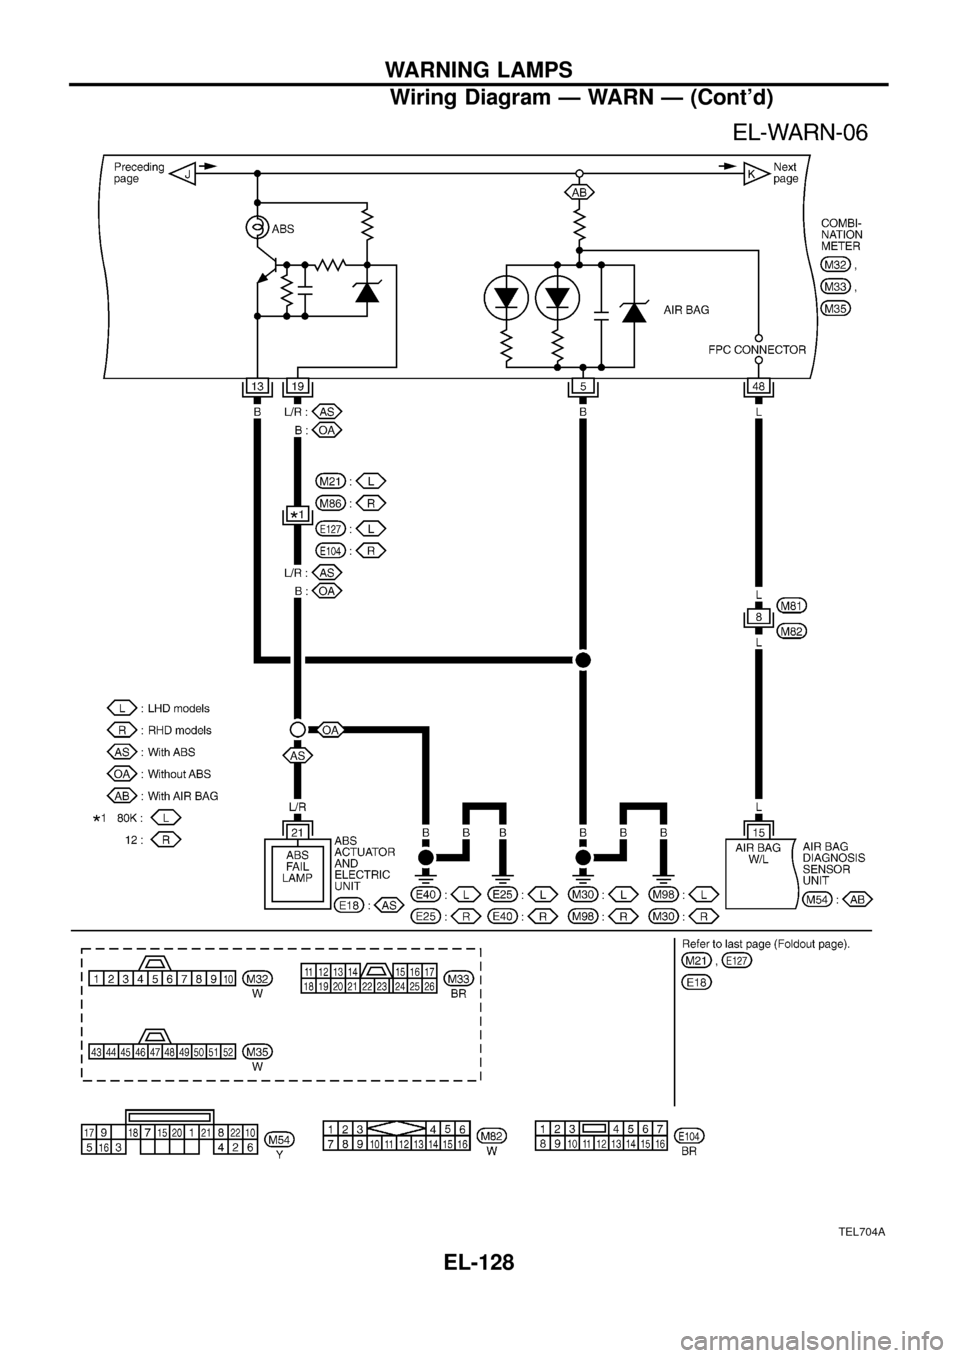 NISSAN PATROL 1998 Y61 / 5.G Electrical System User Guide TEL704A
WARNING LAMPS
Wiring Diagram Ð WARN Ð (Contd)
EL-128 